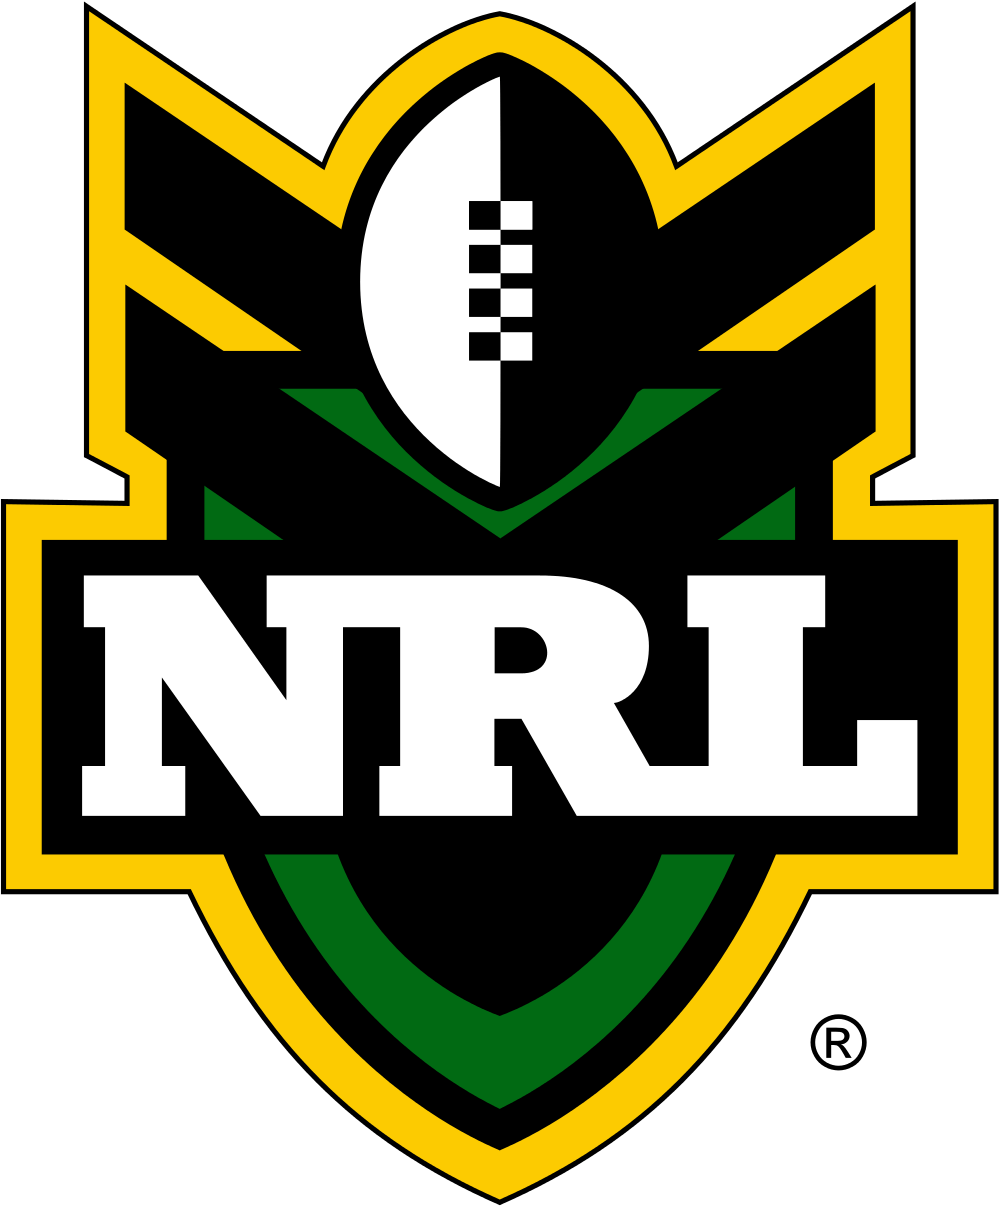 Rugby League Logo - Image - National Rugby League (logo).png | Logopedia | FANDOM ...